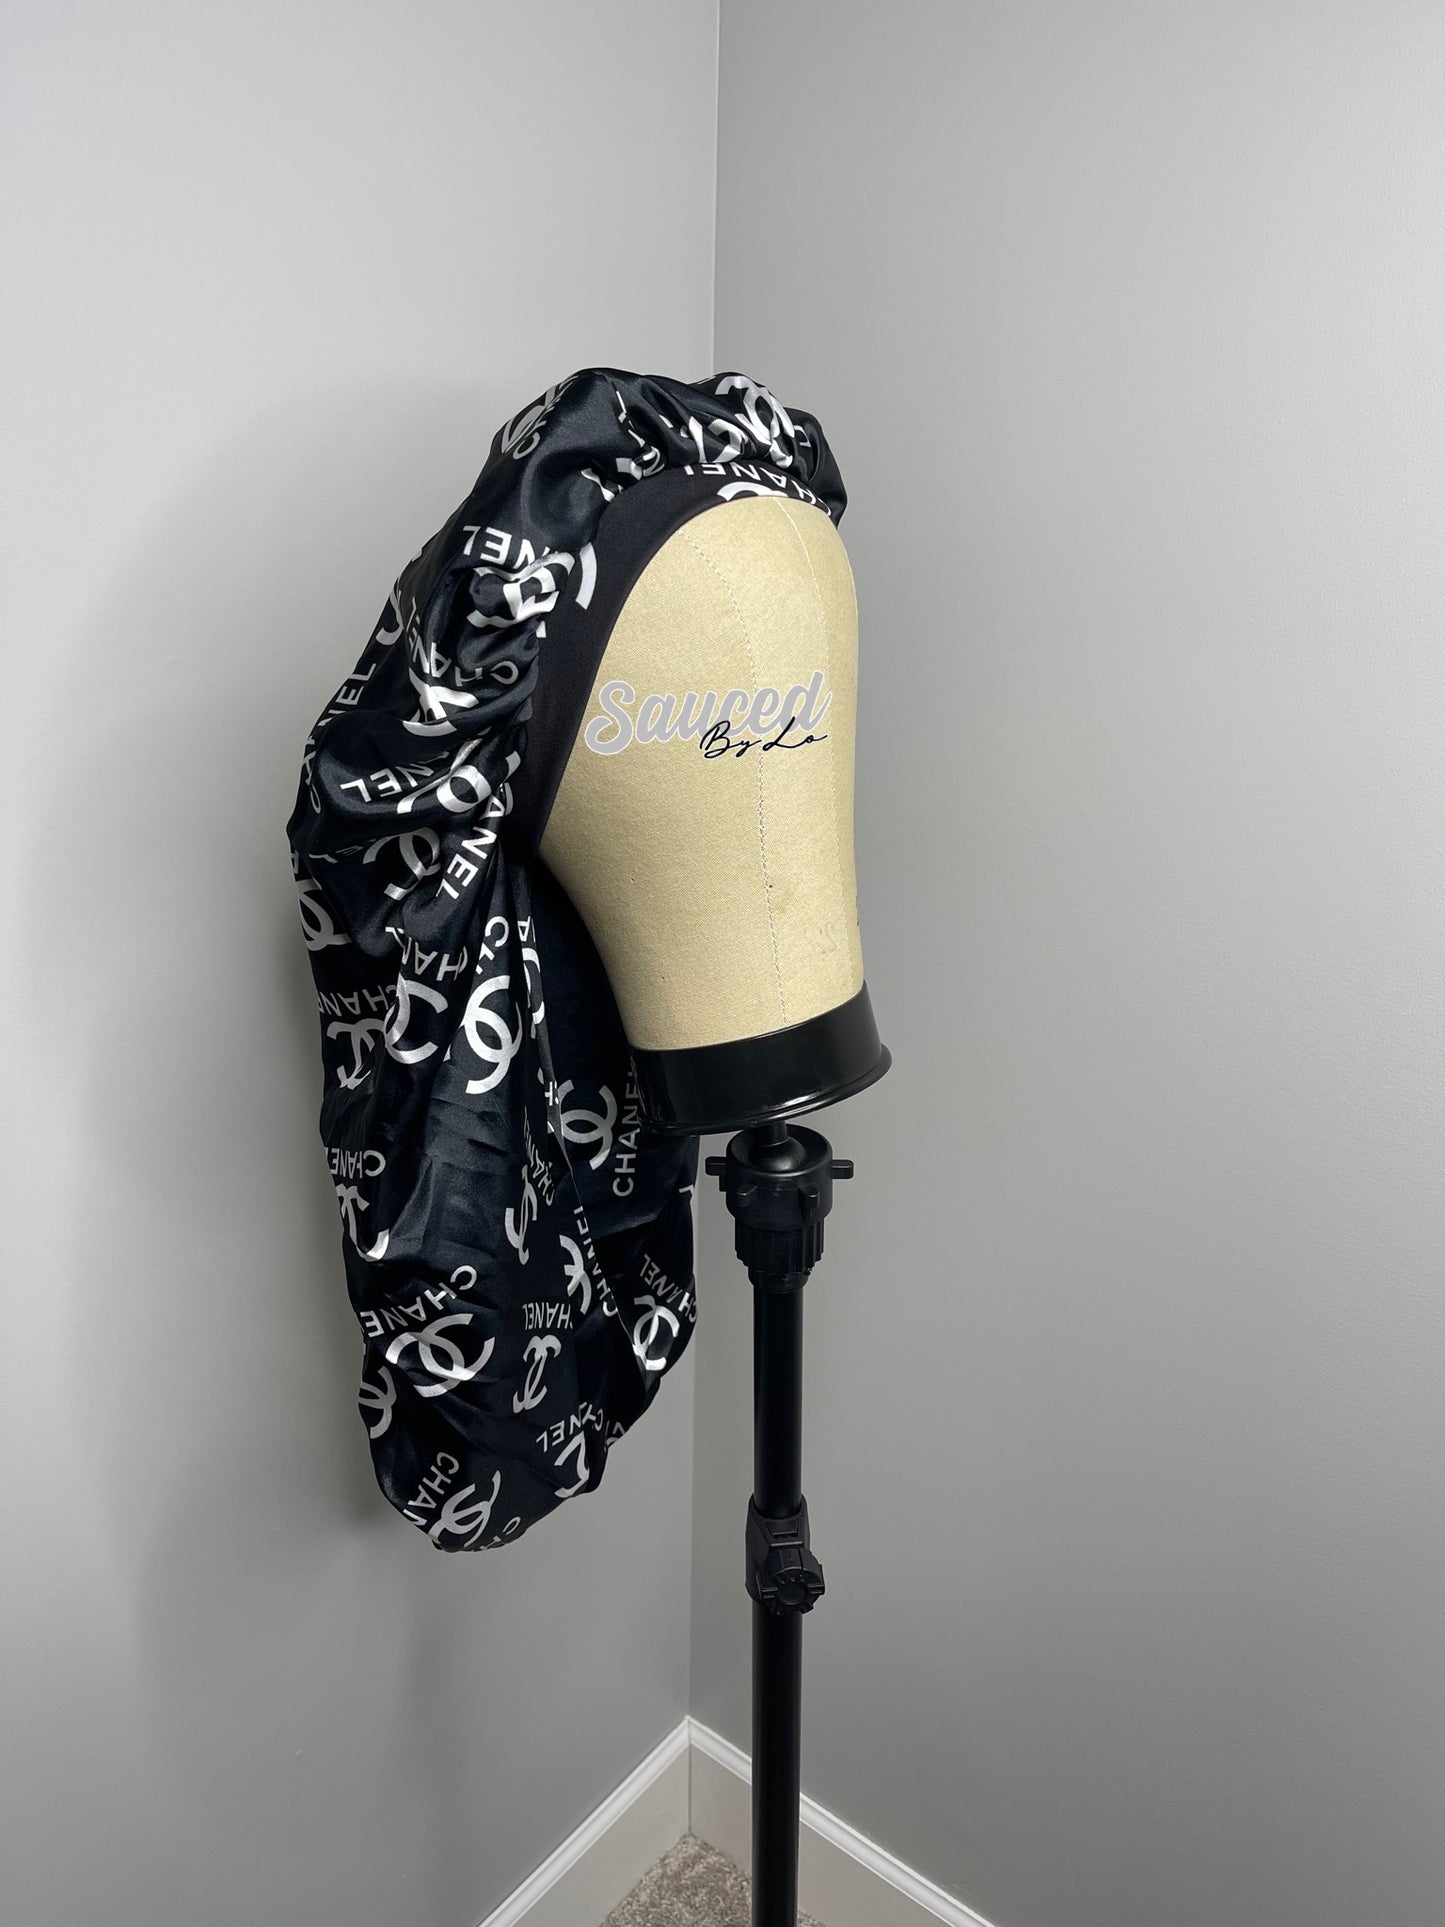 Designer Inspired Silk Bonnet — Divastylz By Shazzette